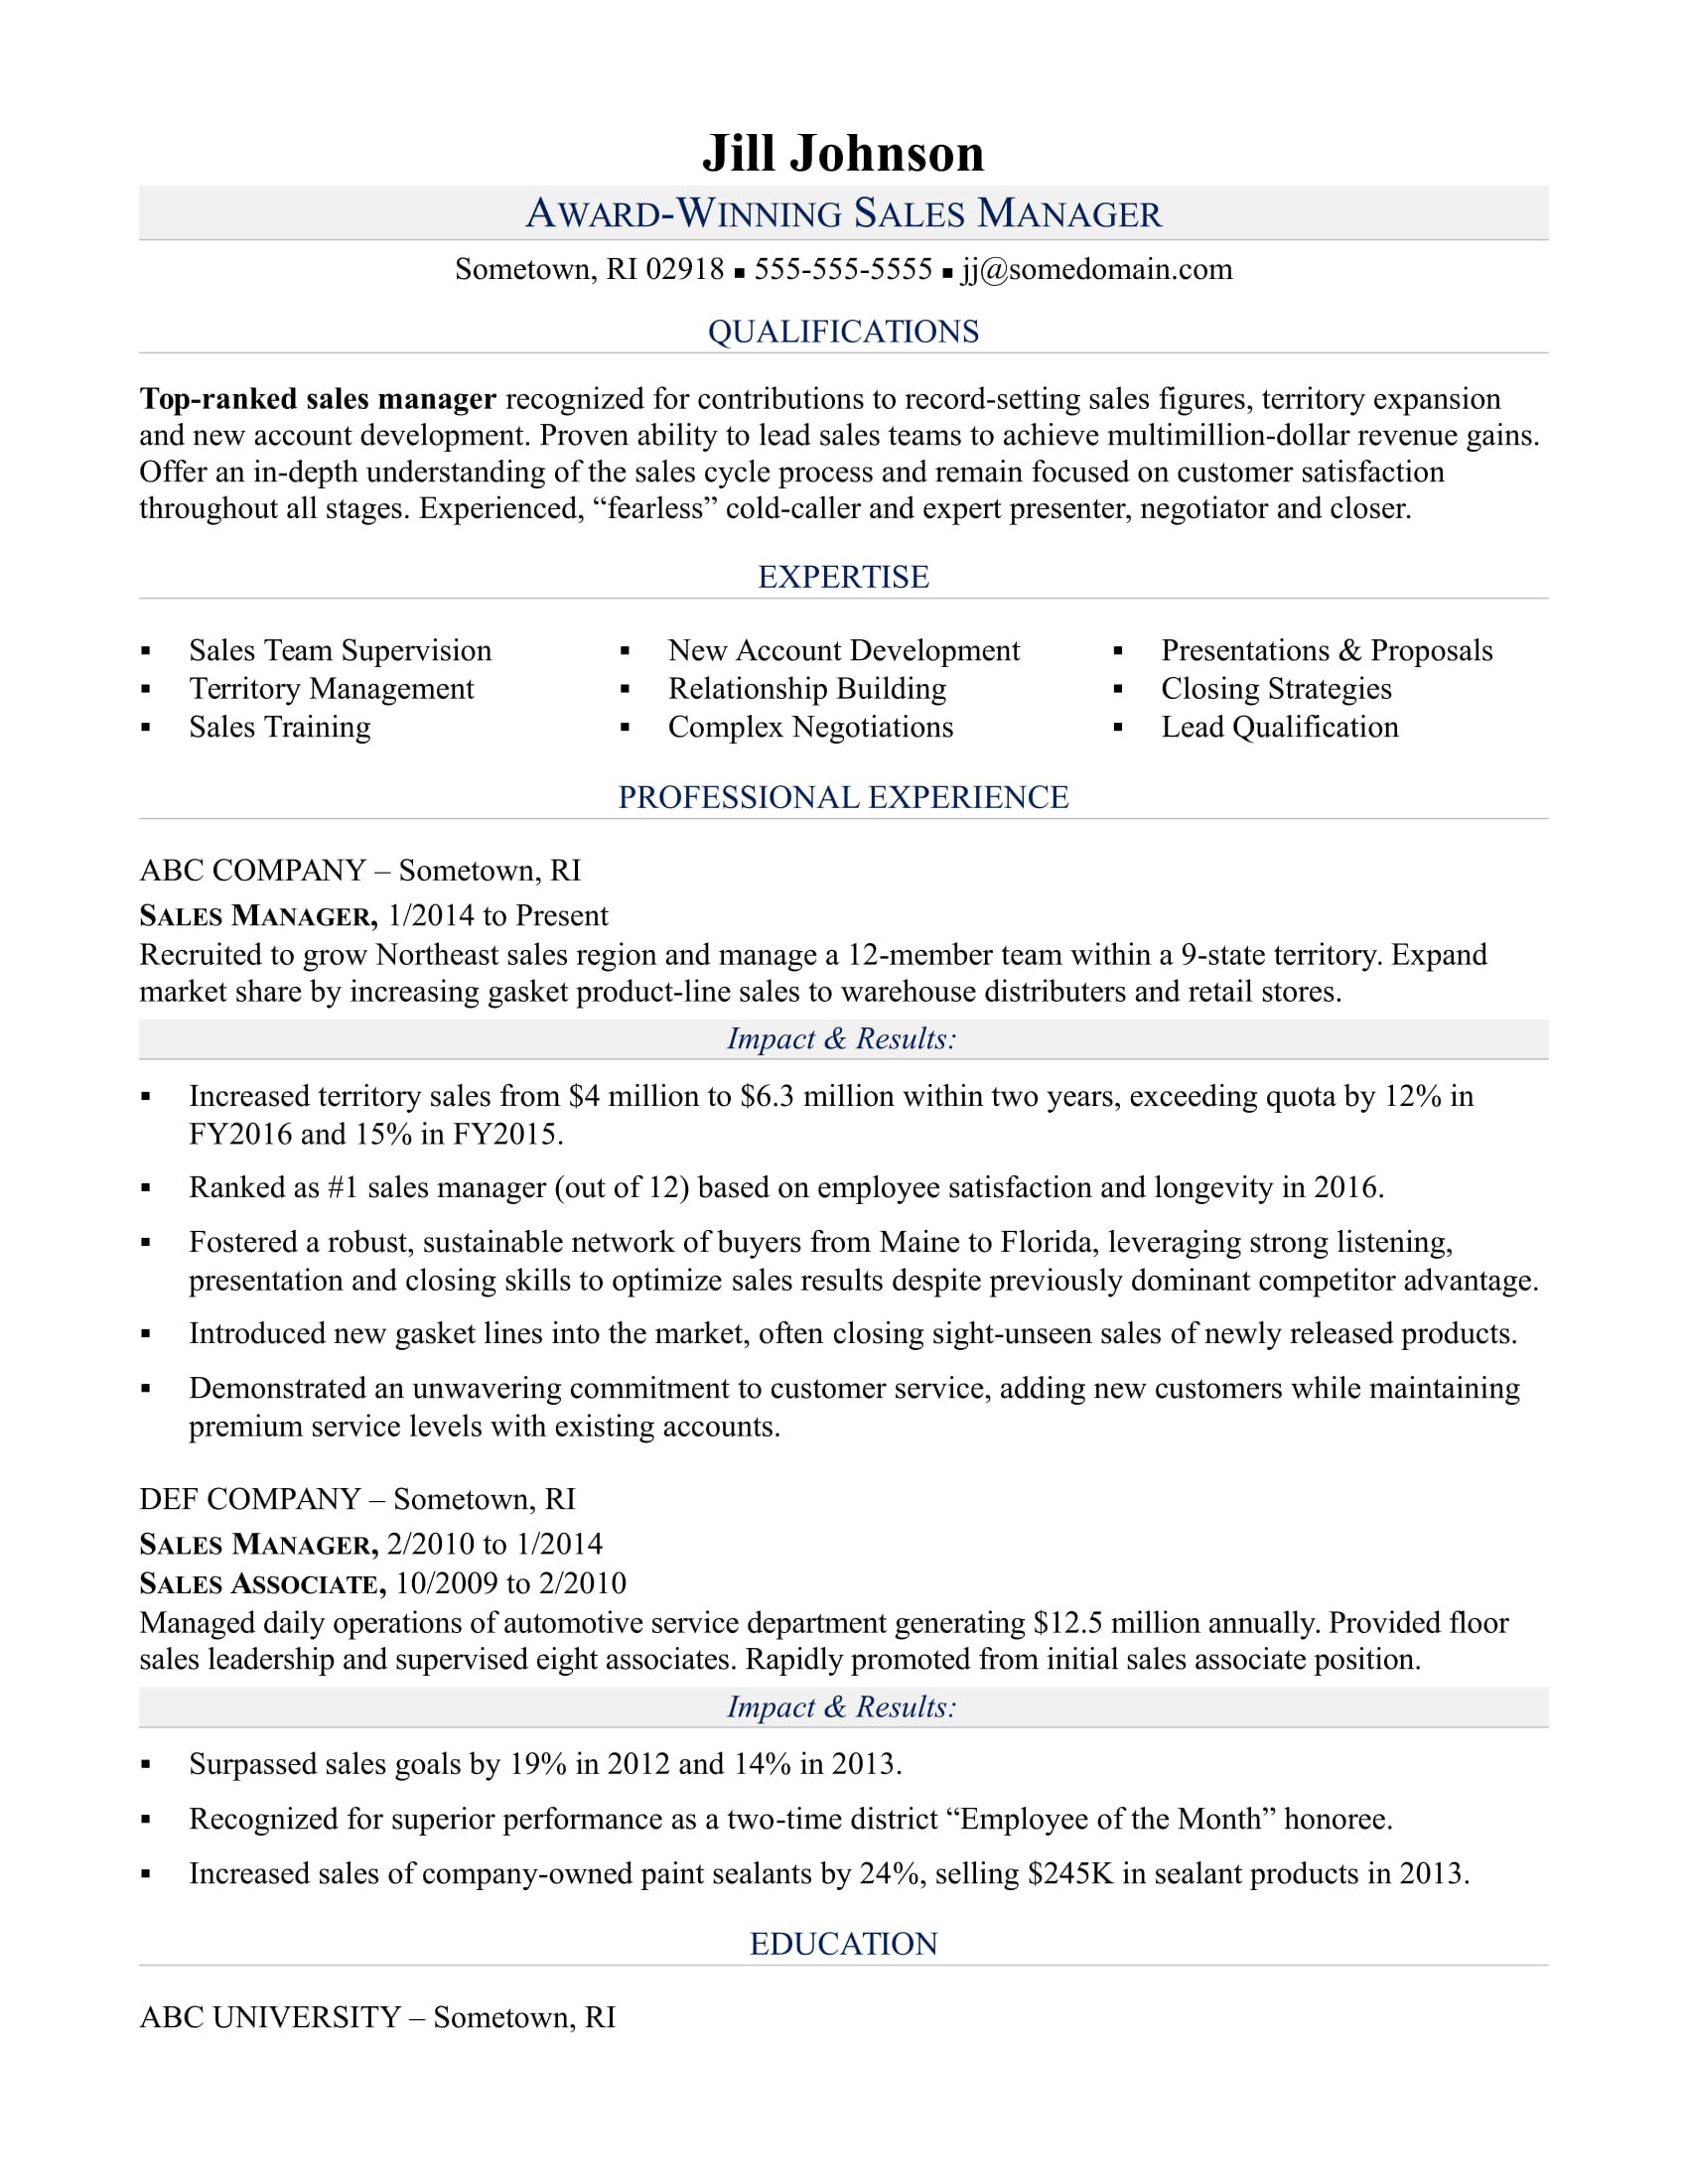 Sample Resume format for Sales Executive Sales Manager Resume Sample Monster.com